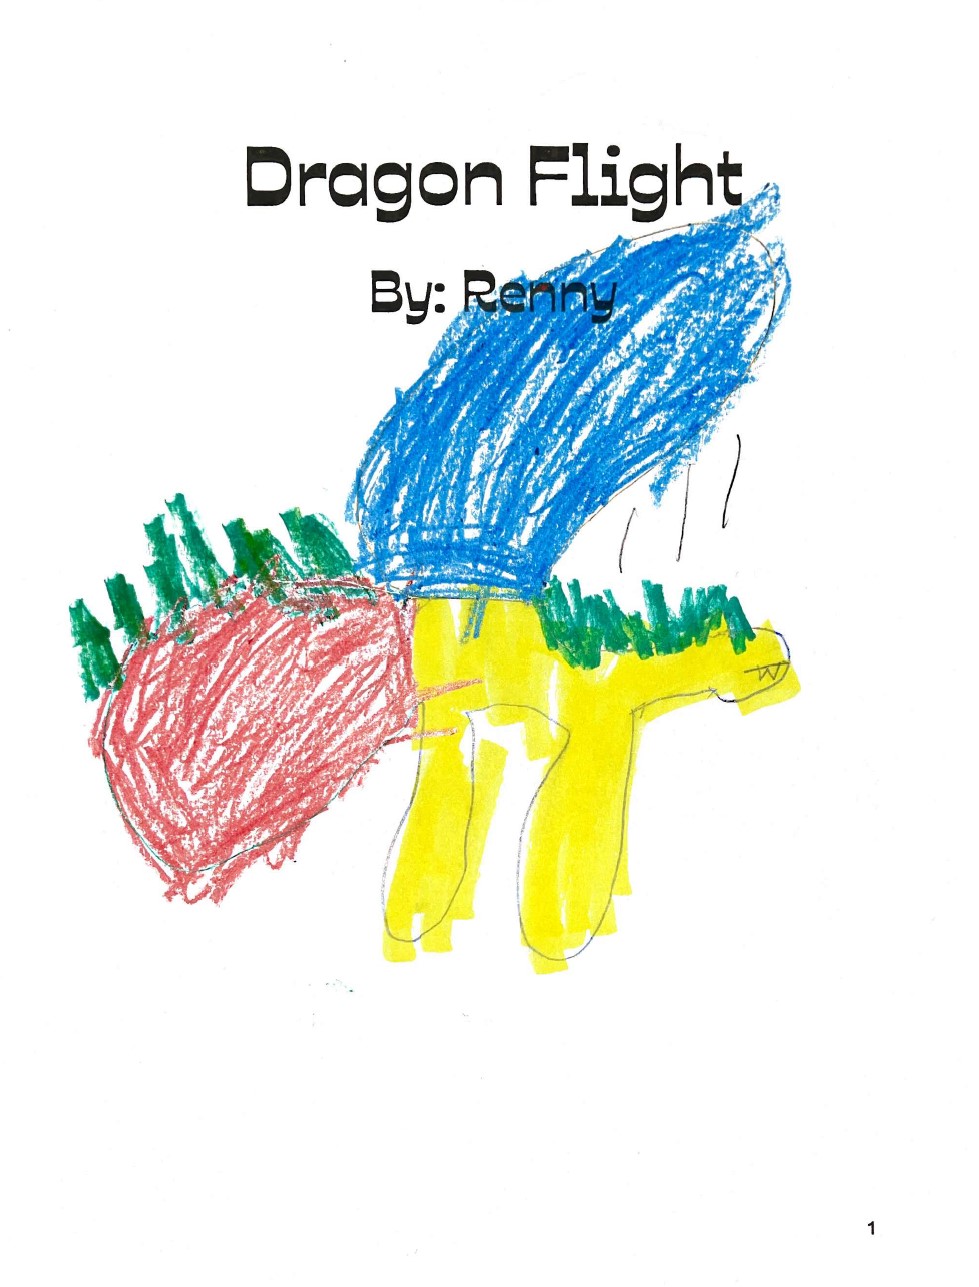 Dragon Flight by Renny P.